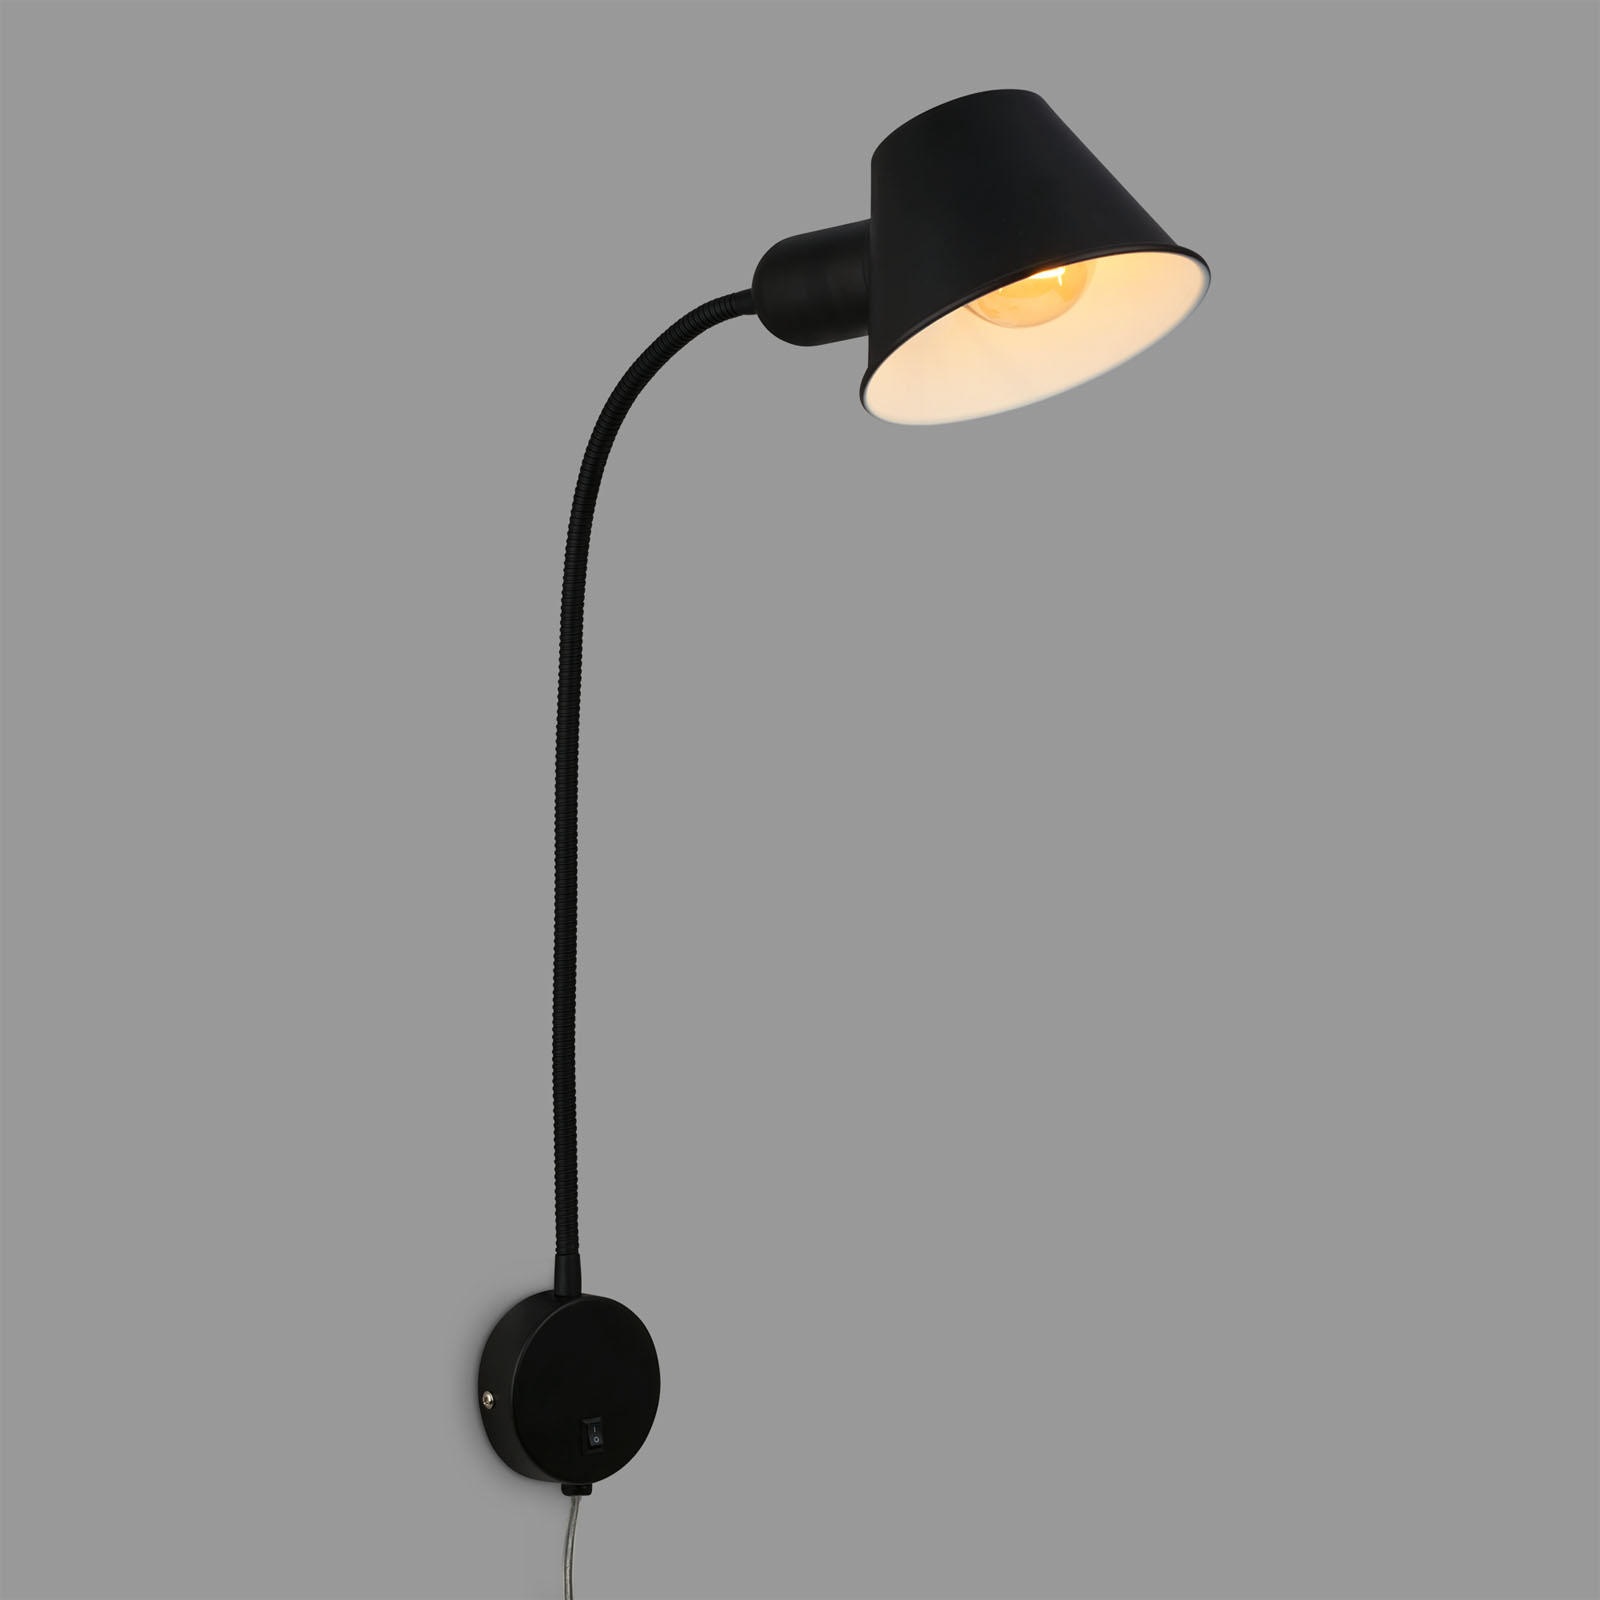 Wandlamp Brello, ronde wandlamp, zwart